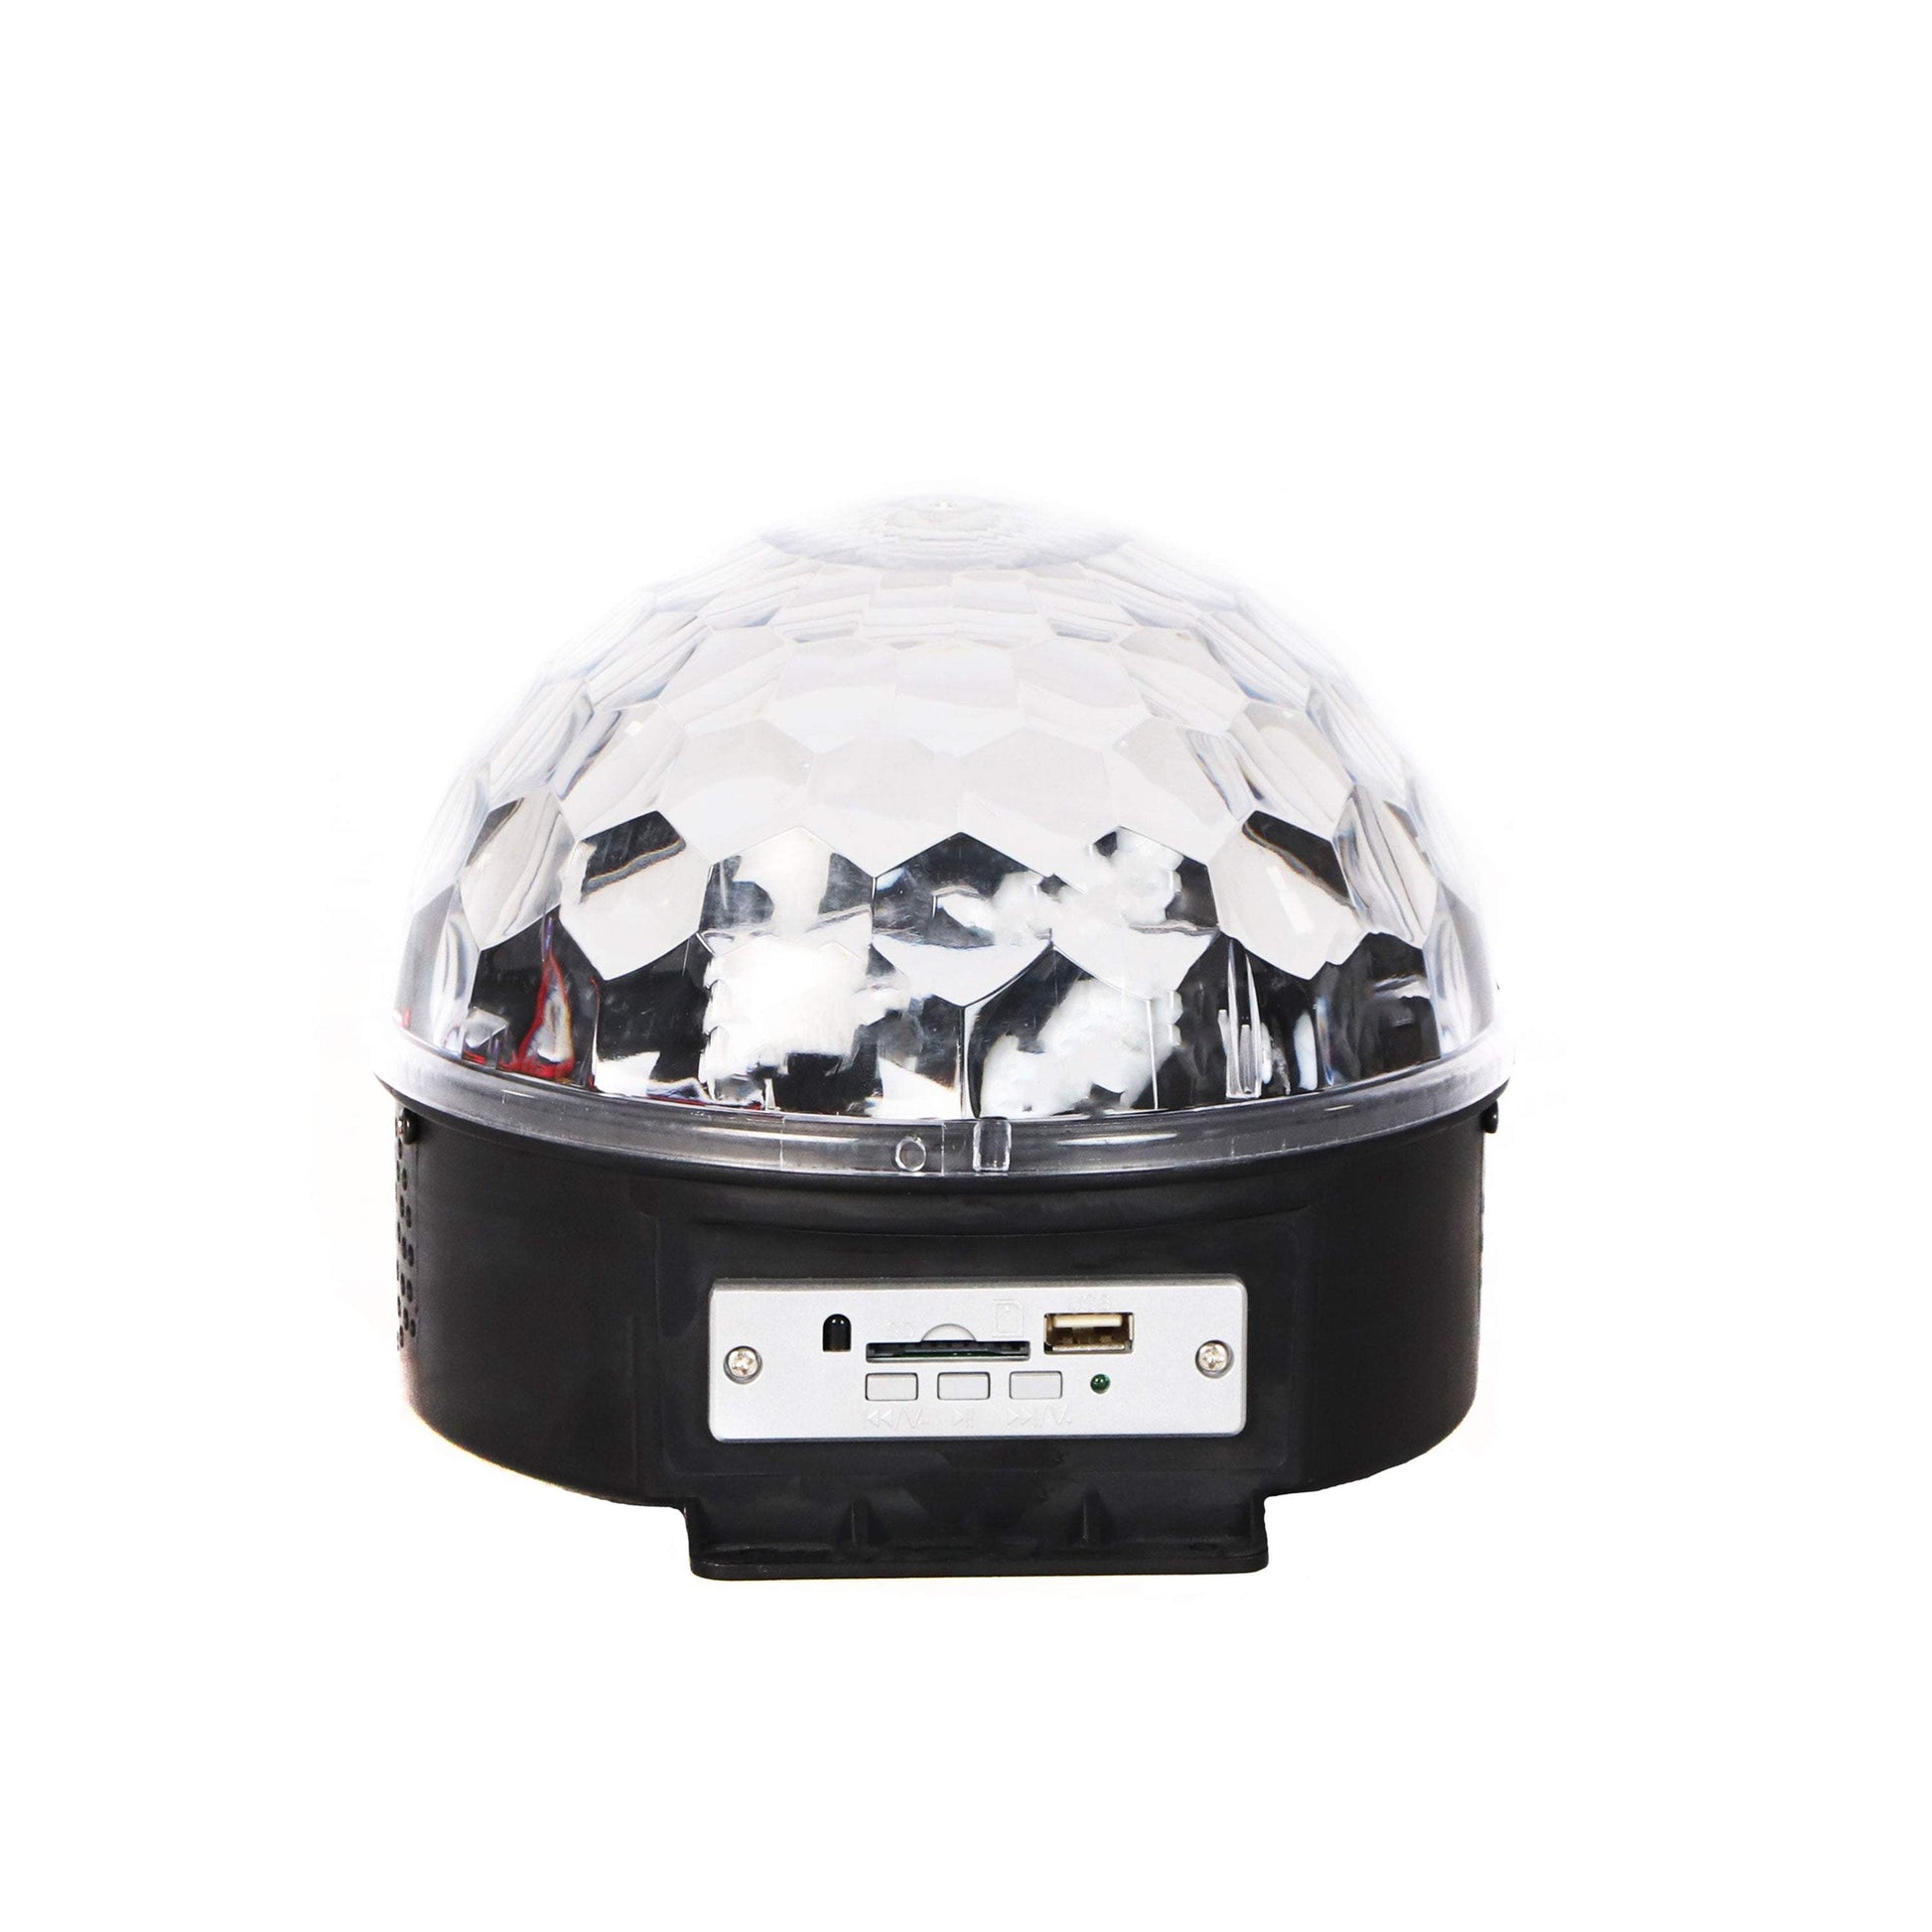 LED Crystal Ball Light-Royal Brands Co-